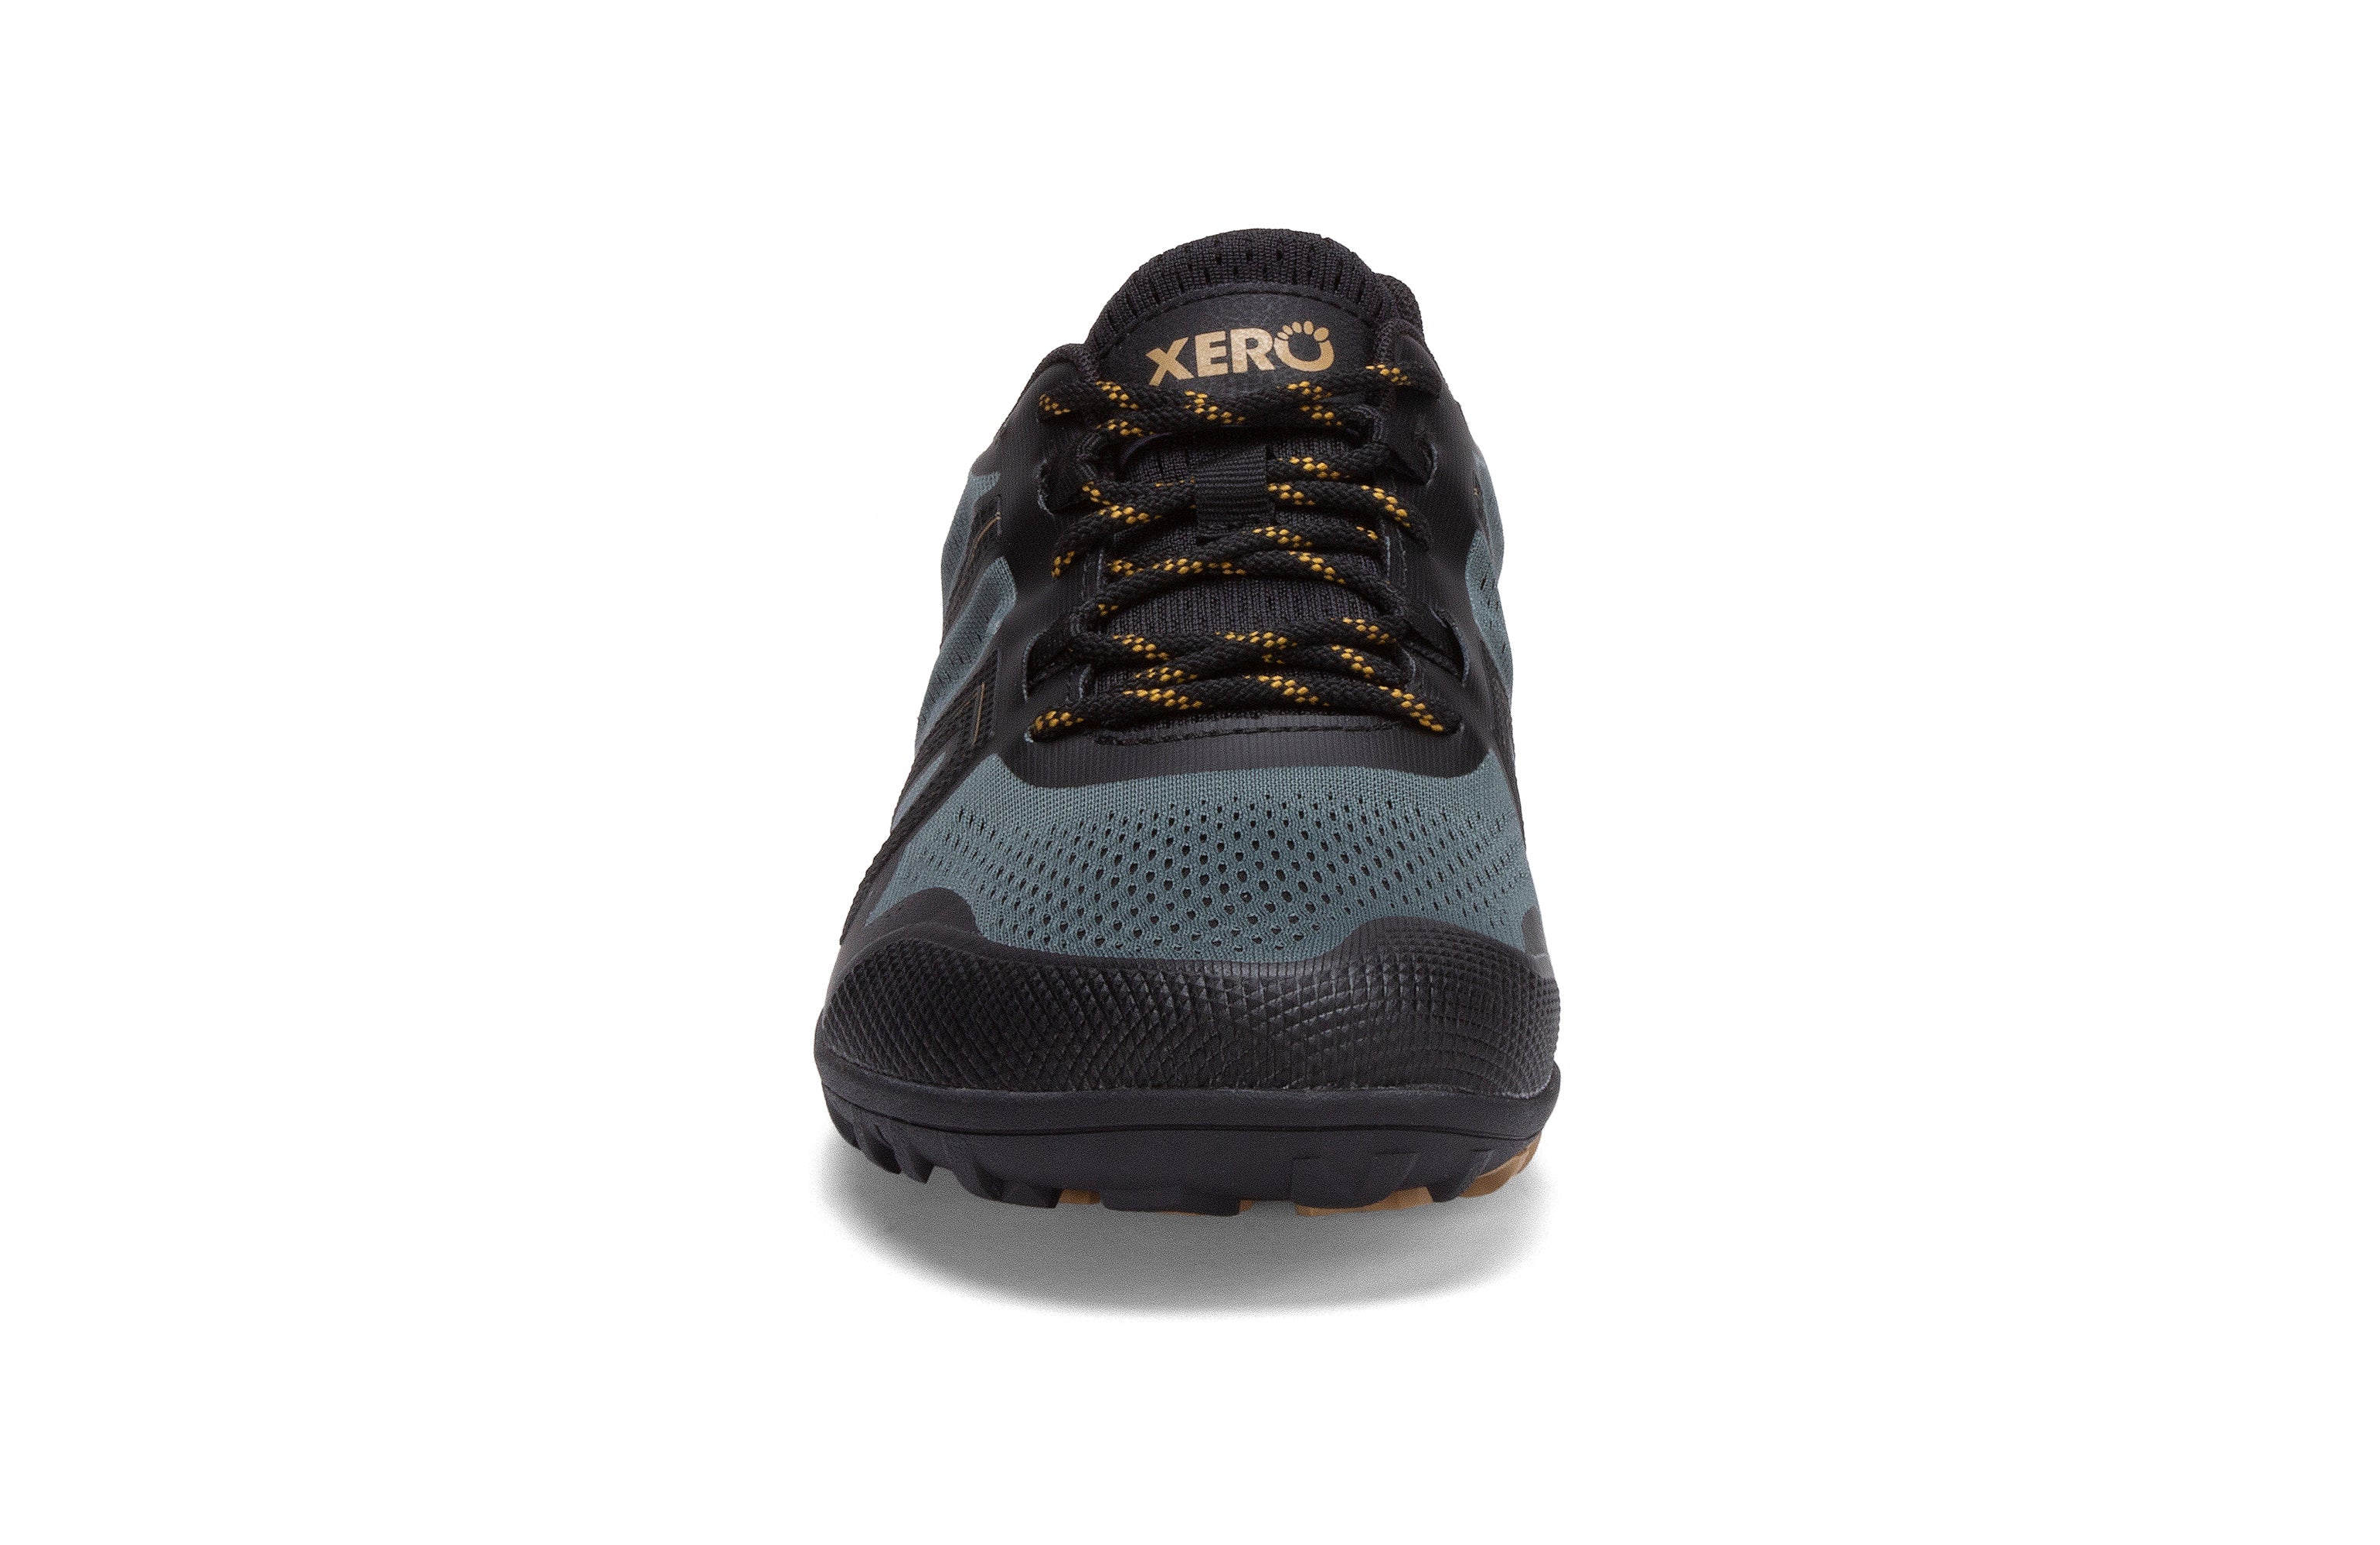 Xero Shoes Mesa Trail II Mens barfods vandresko til mænd i farven forest, forfra